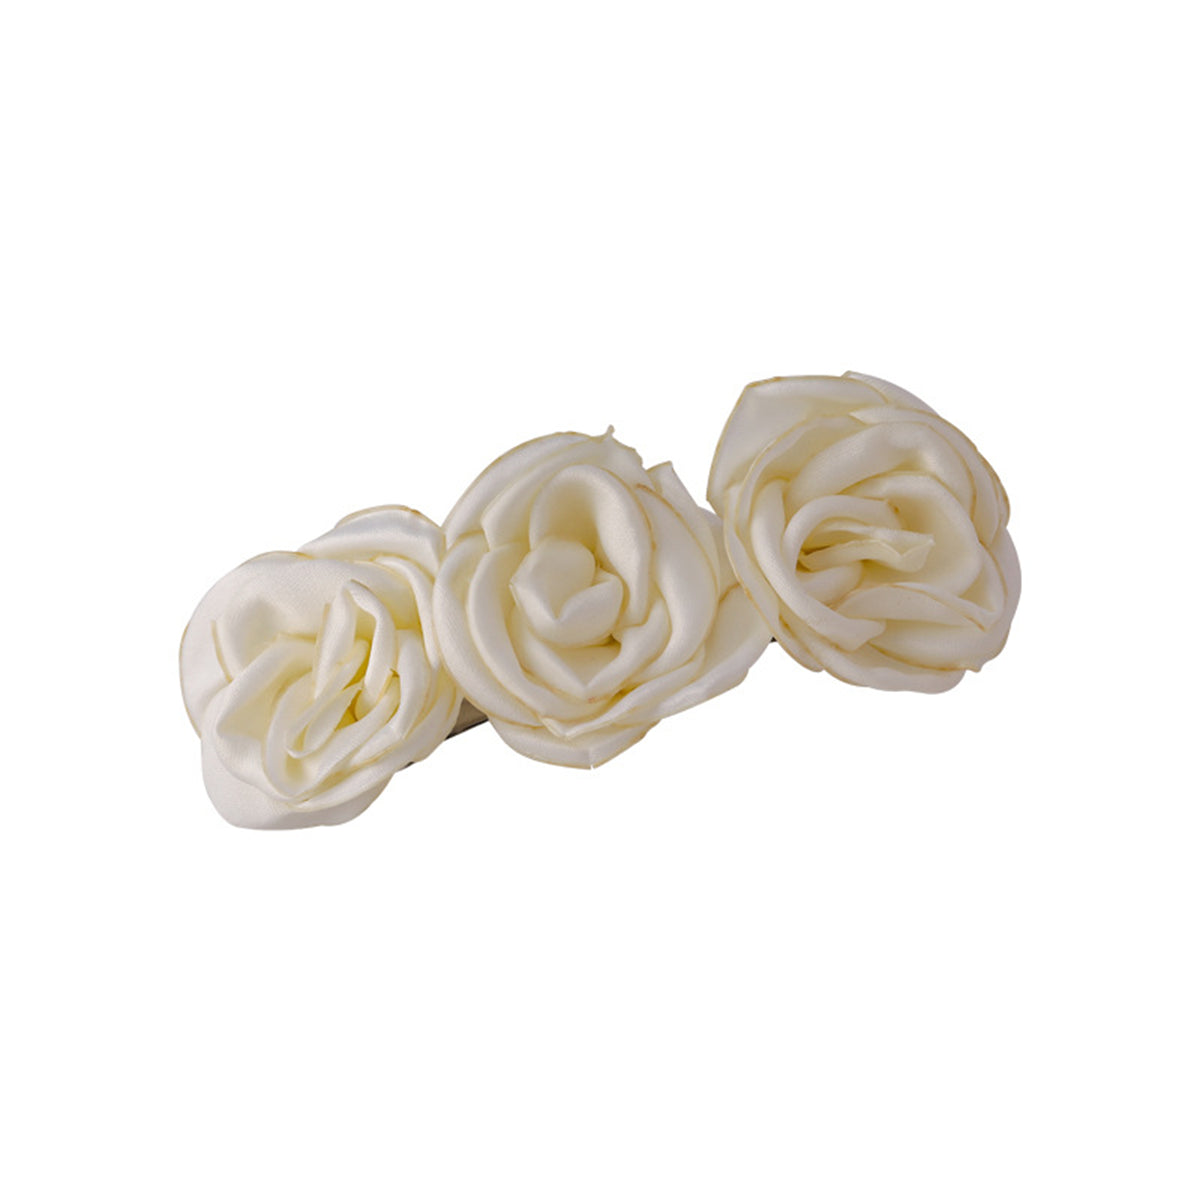 Silver-Plated & White Cloth Rose Hair Clip